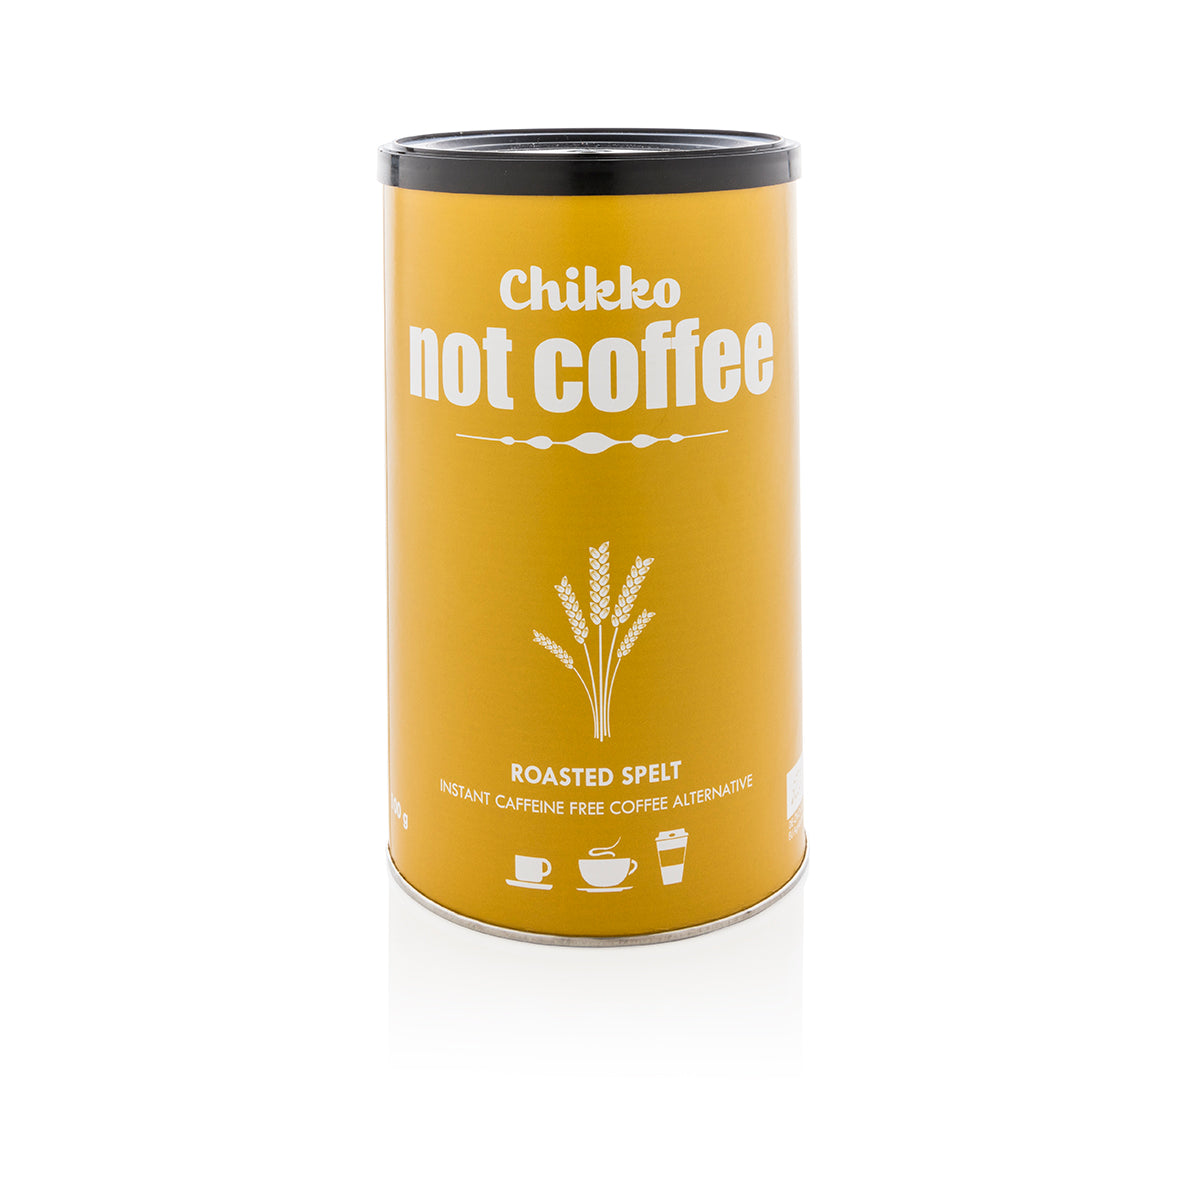 Chikko Not Coffee - Gerösteter Dinkel 100g